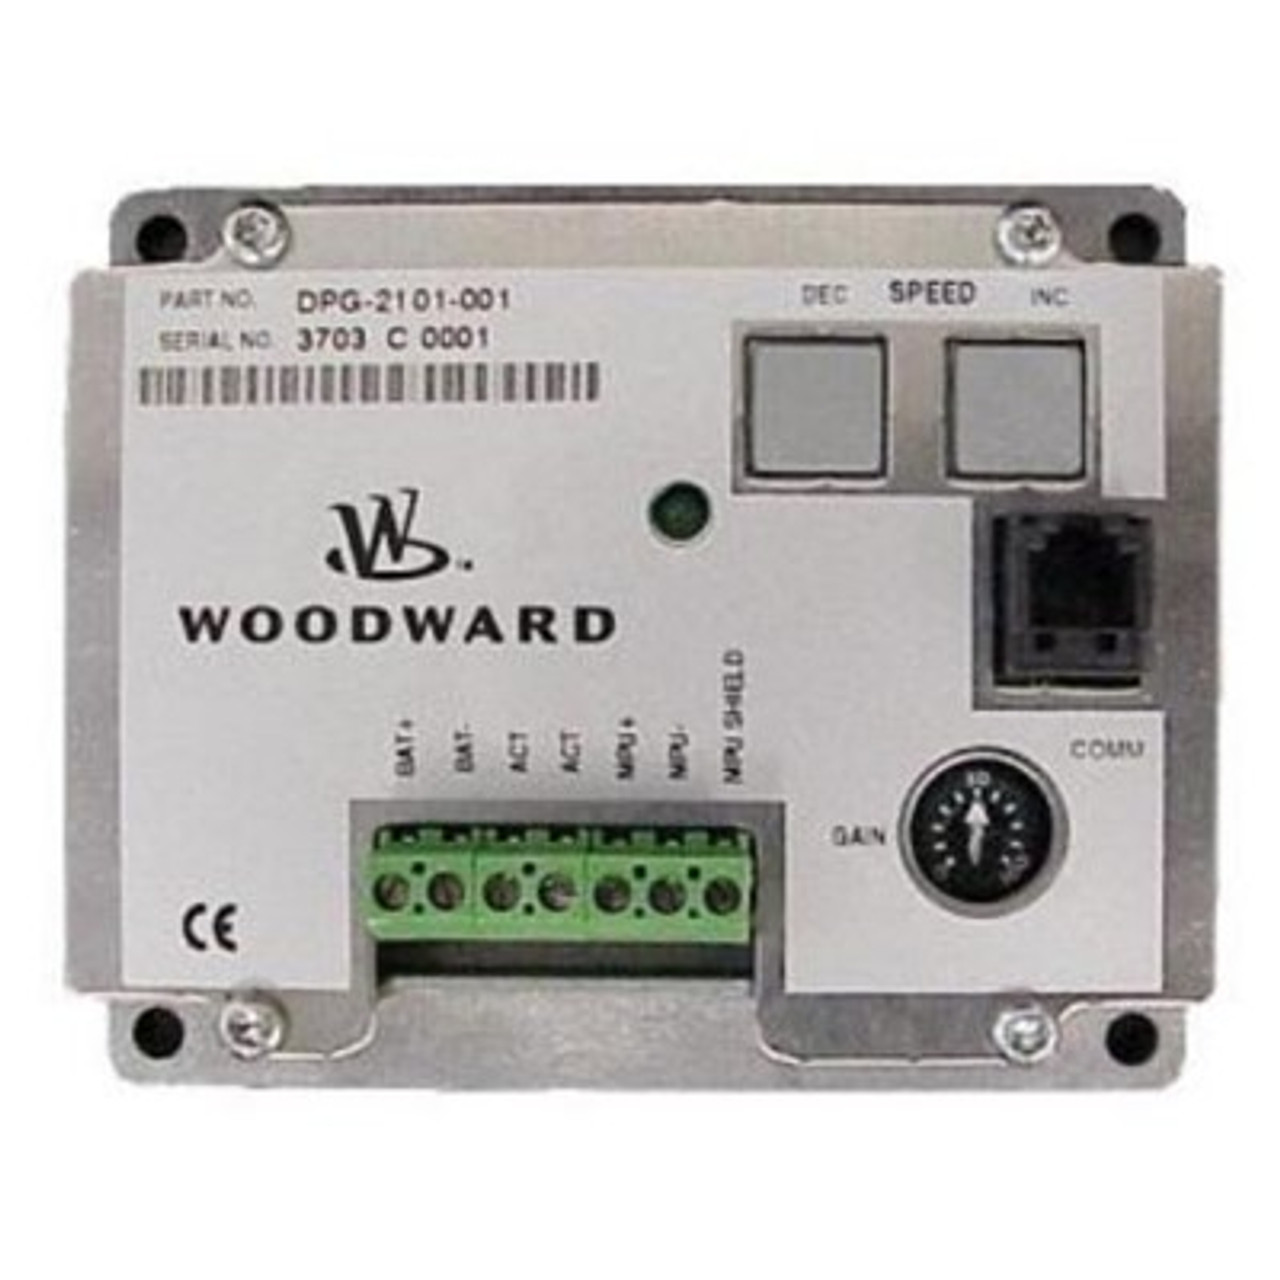 Woodward DPG-2101-002, Speed Controller, MPU Speed Sensing